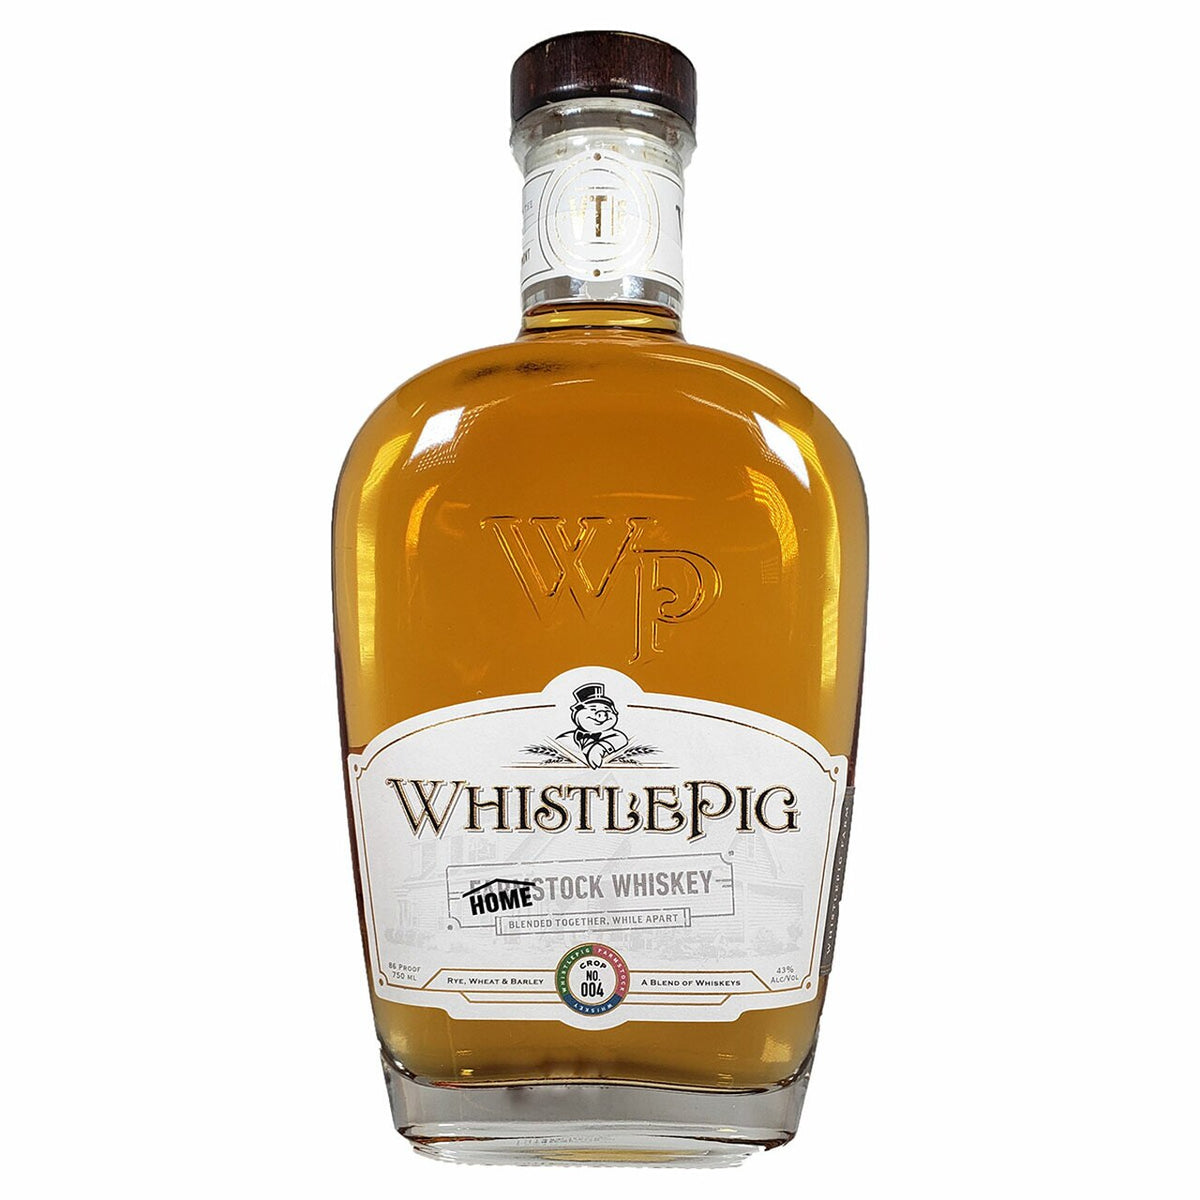 Whistle Pig Whistlepig Homestock Whiskey Whiskey